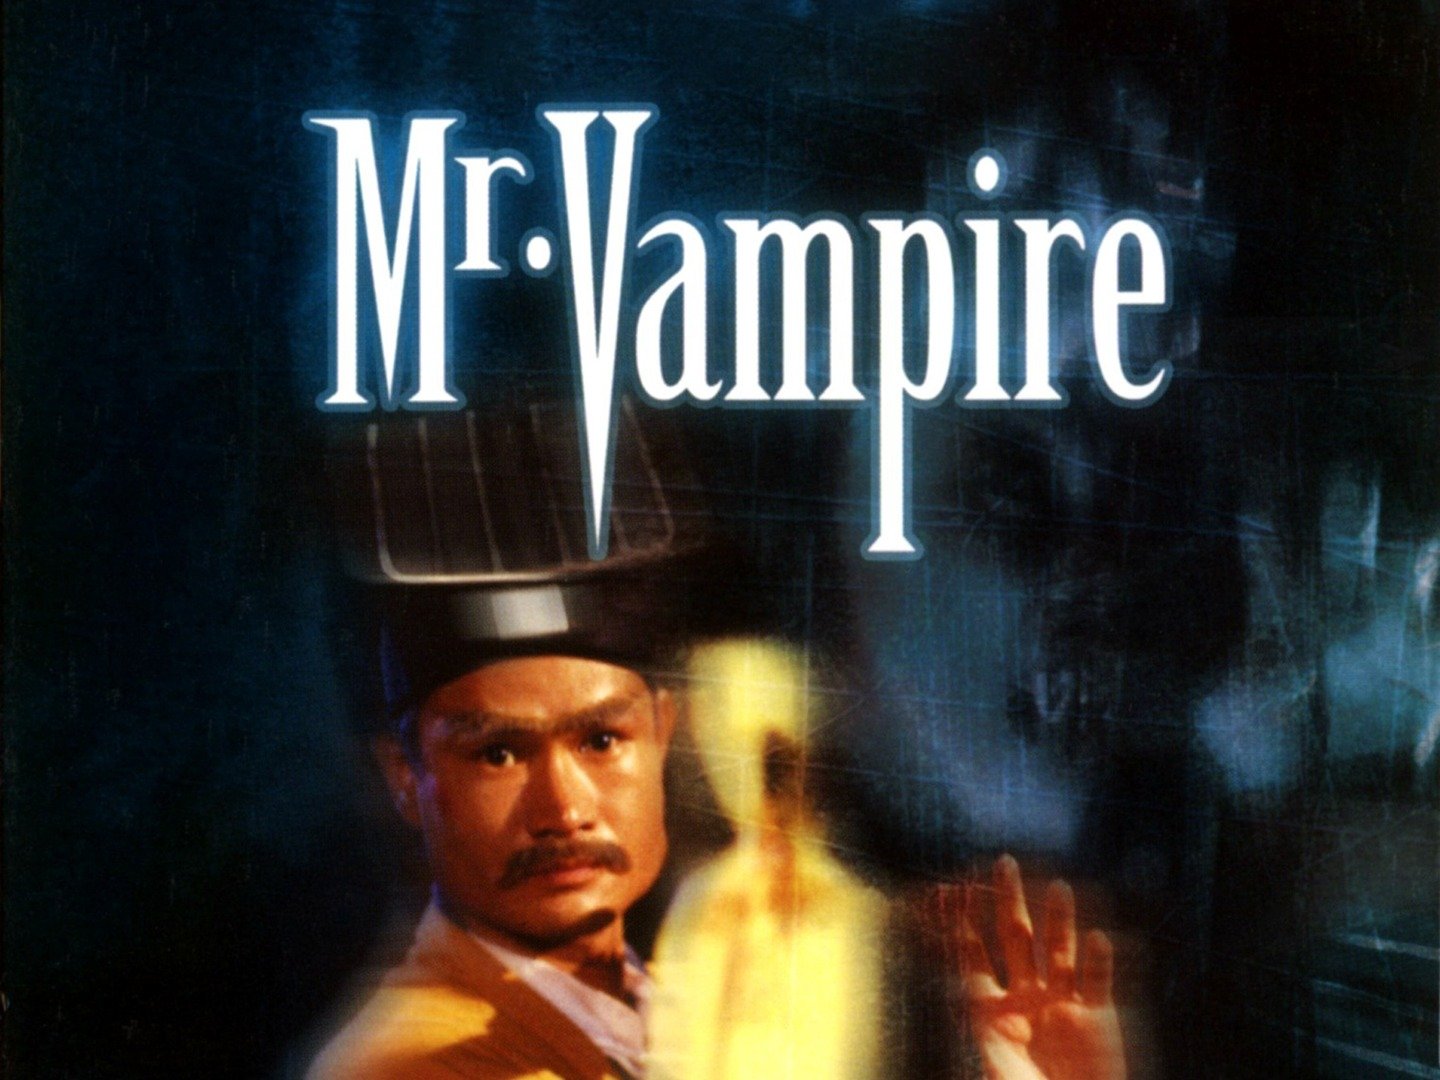 vampires 1986 movie